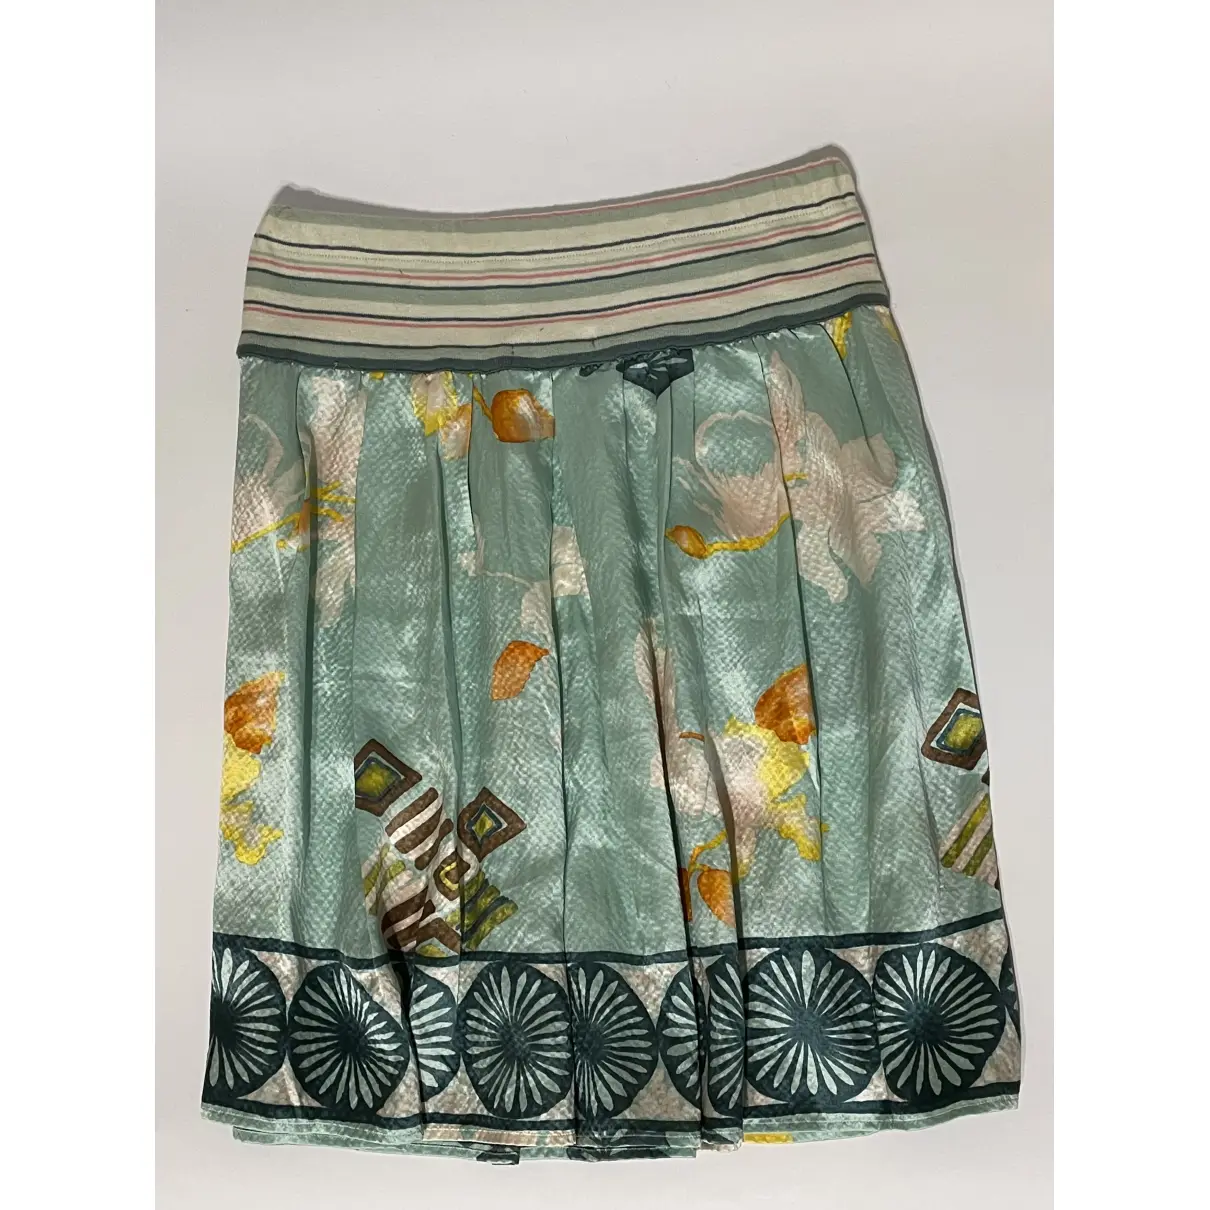 Buy Essentiel Antwerp Silk mid-length skirt online